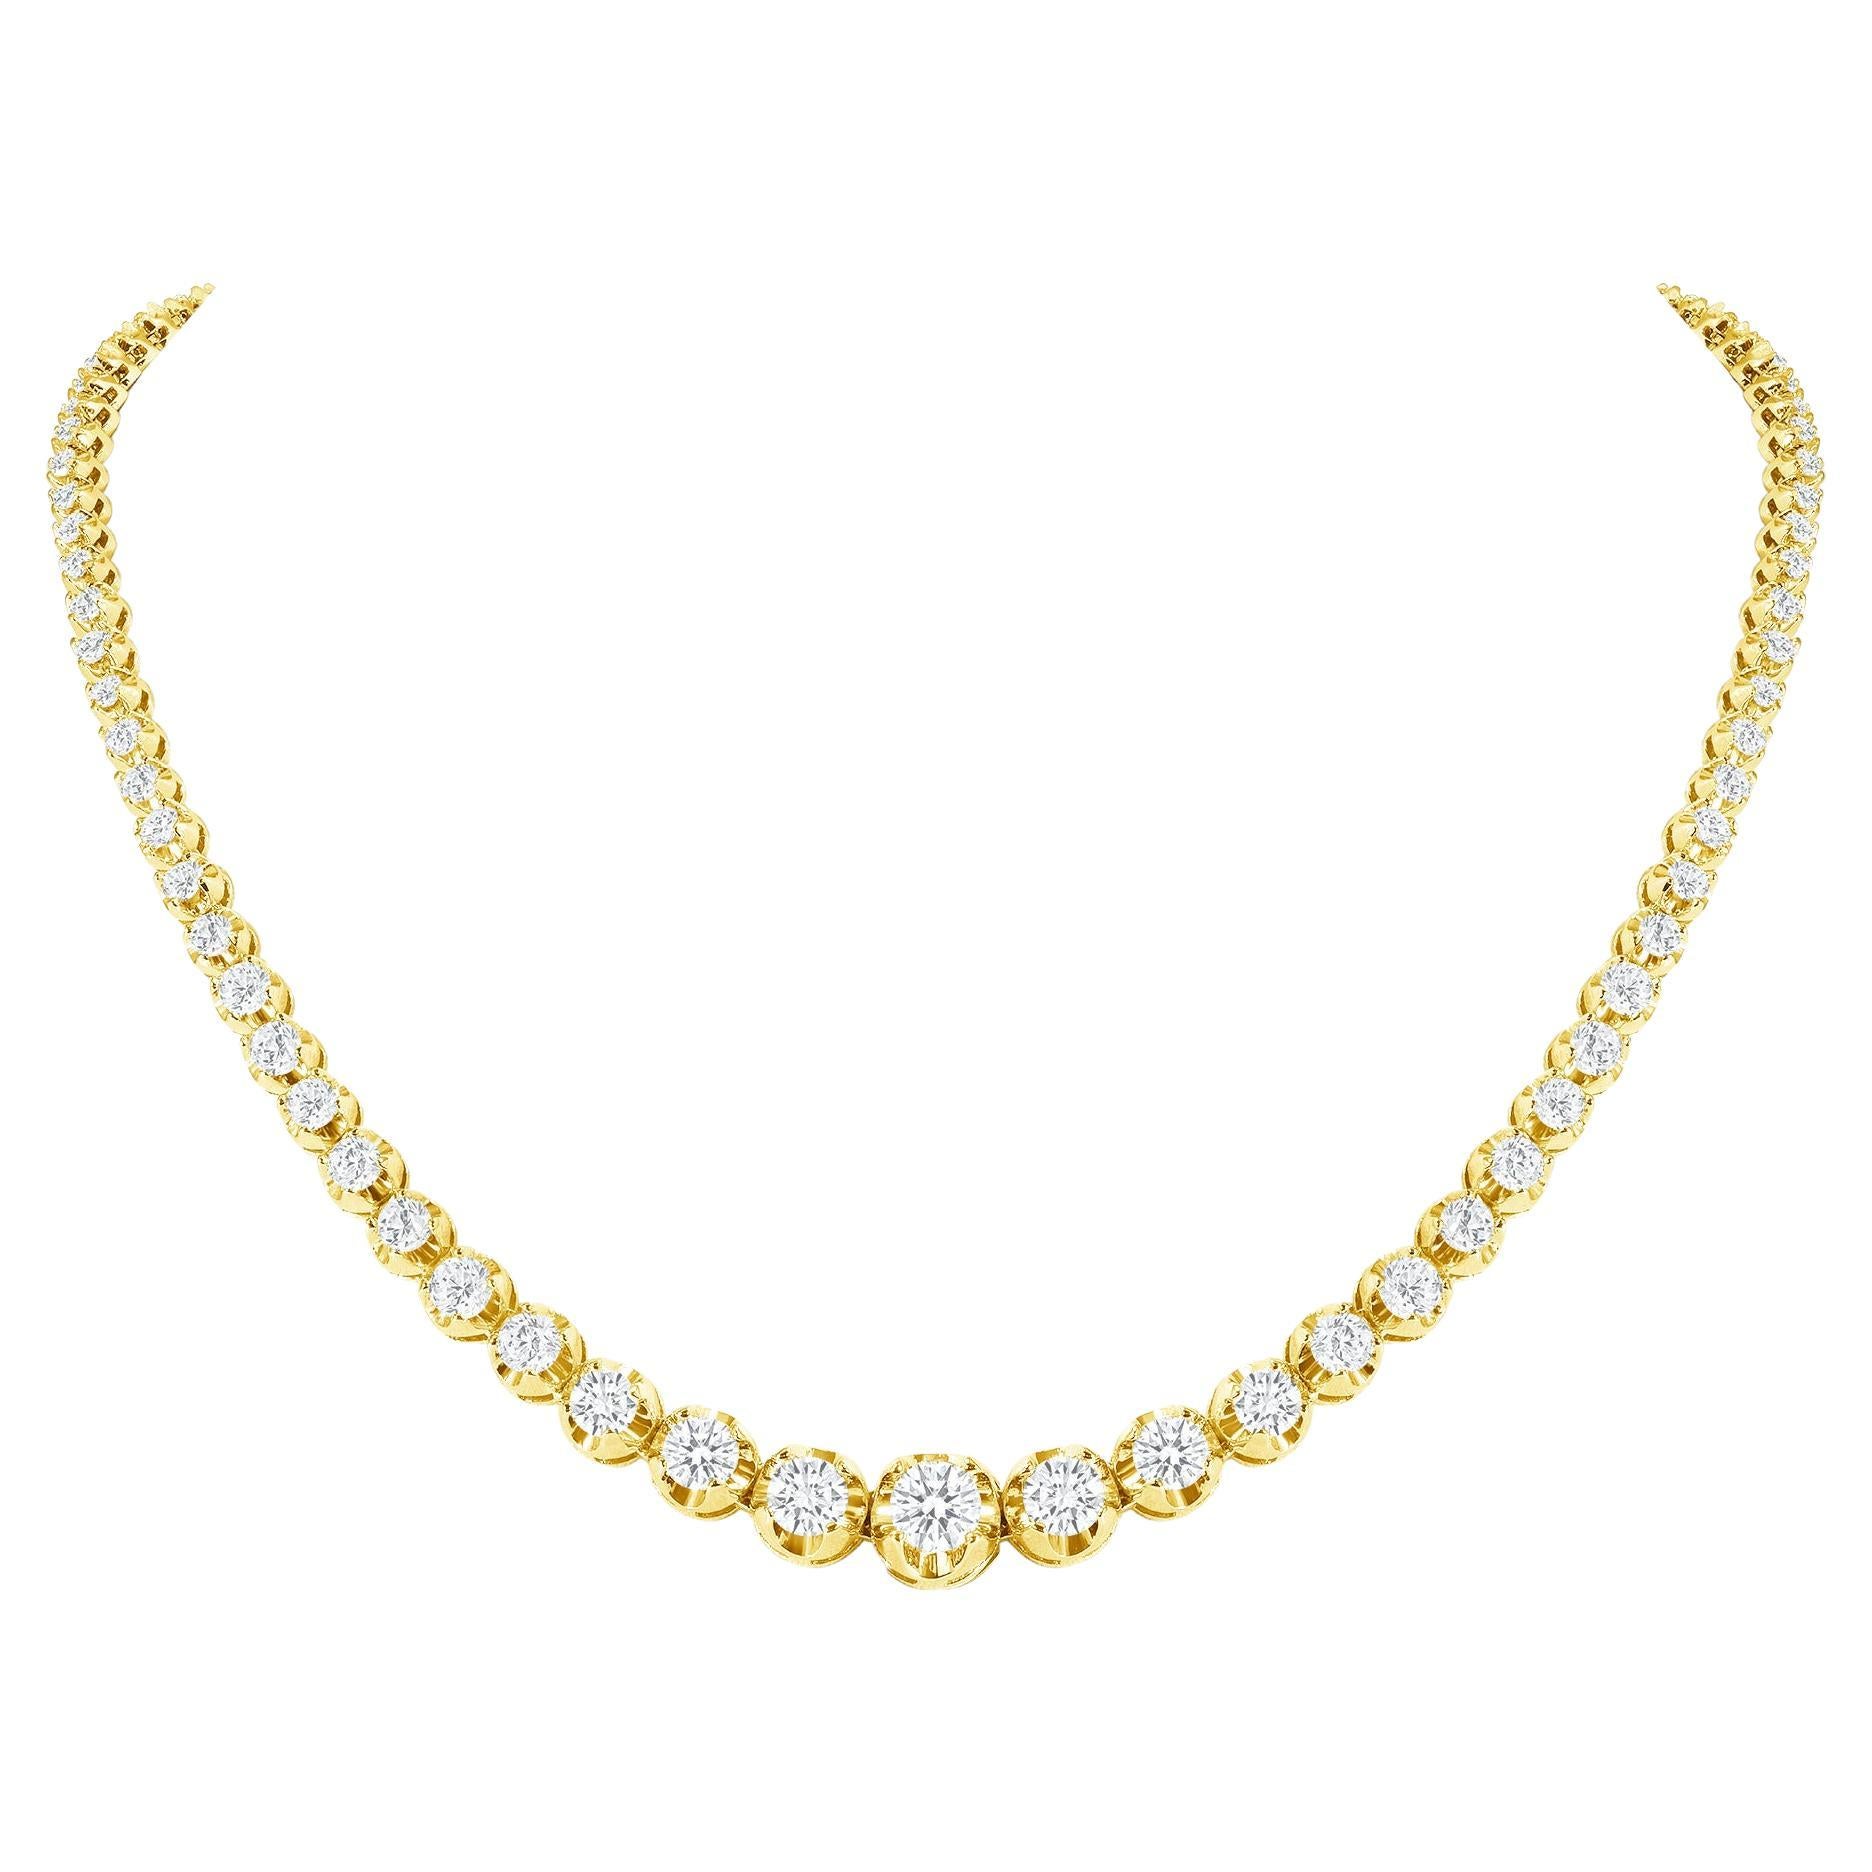 14k Yellow Gold 5Carat Graduated Diamond Tennis Necklace Illusion Setting